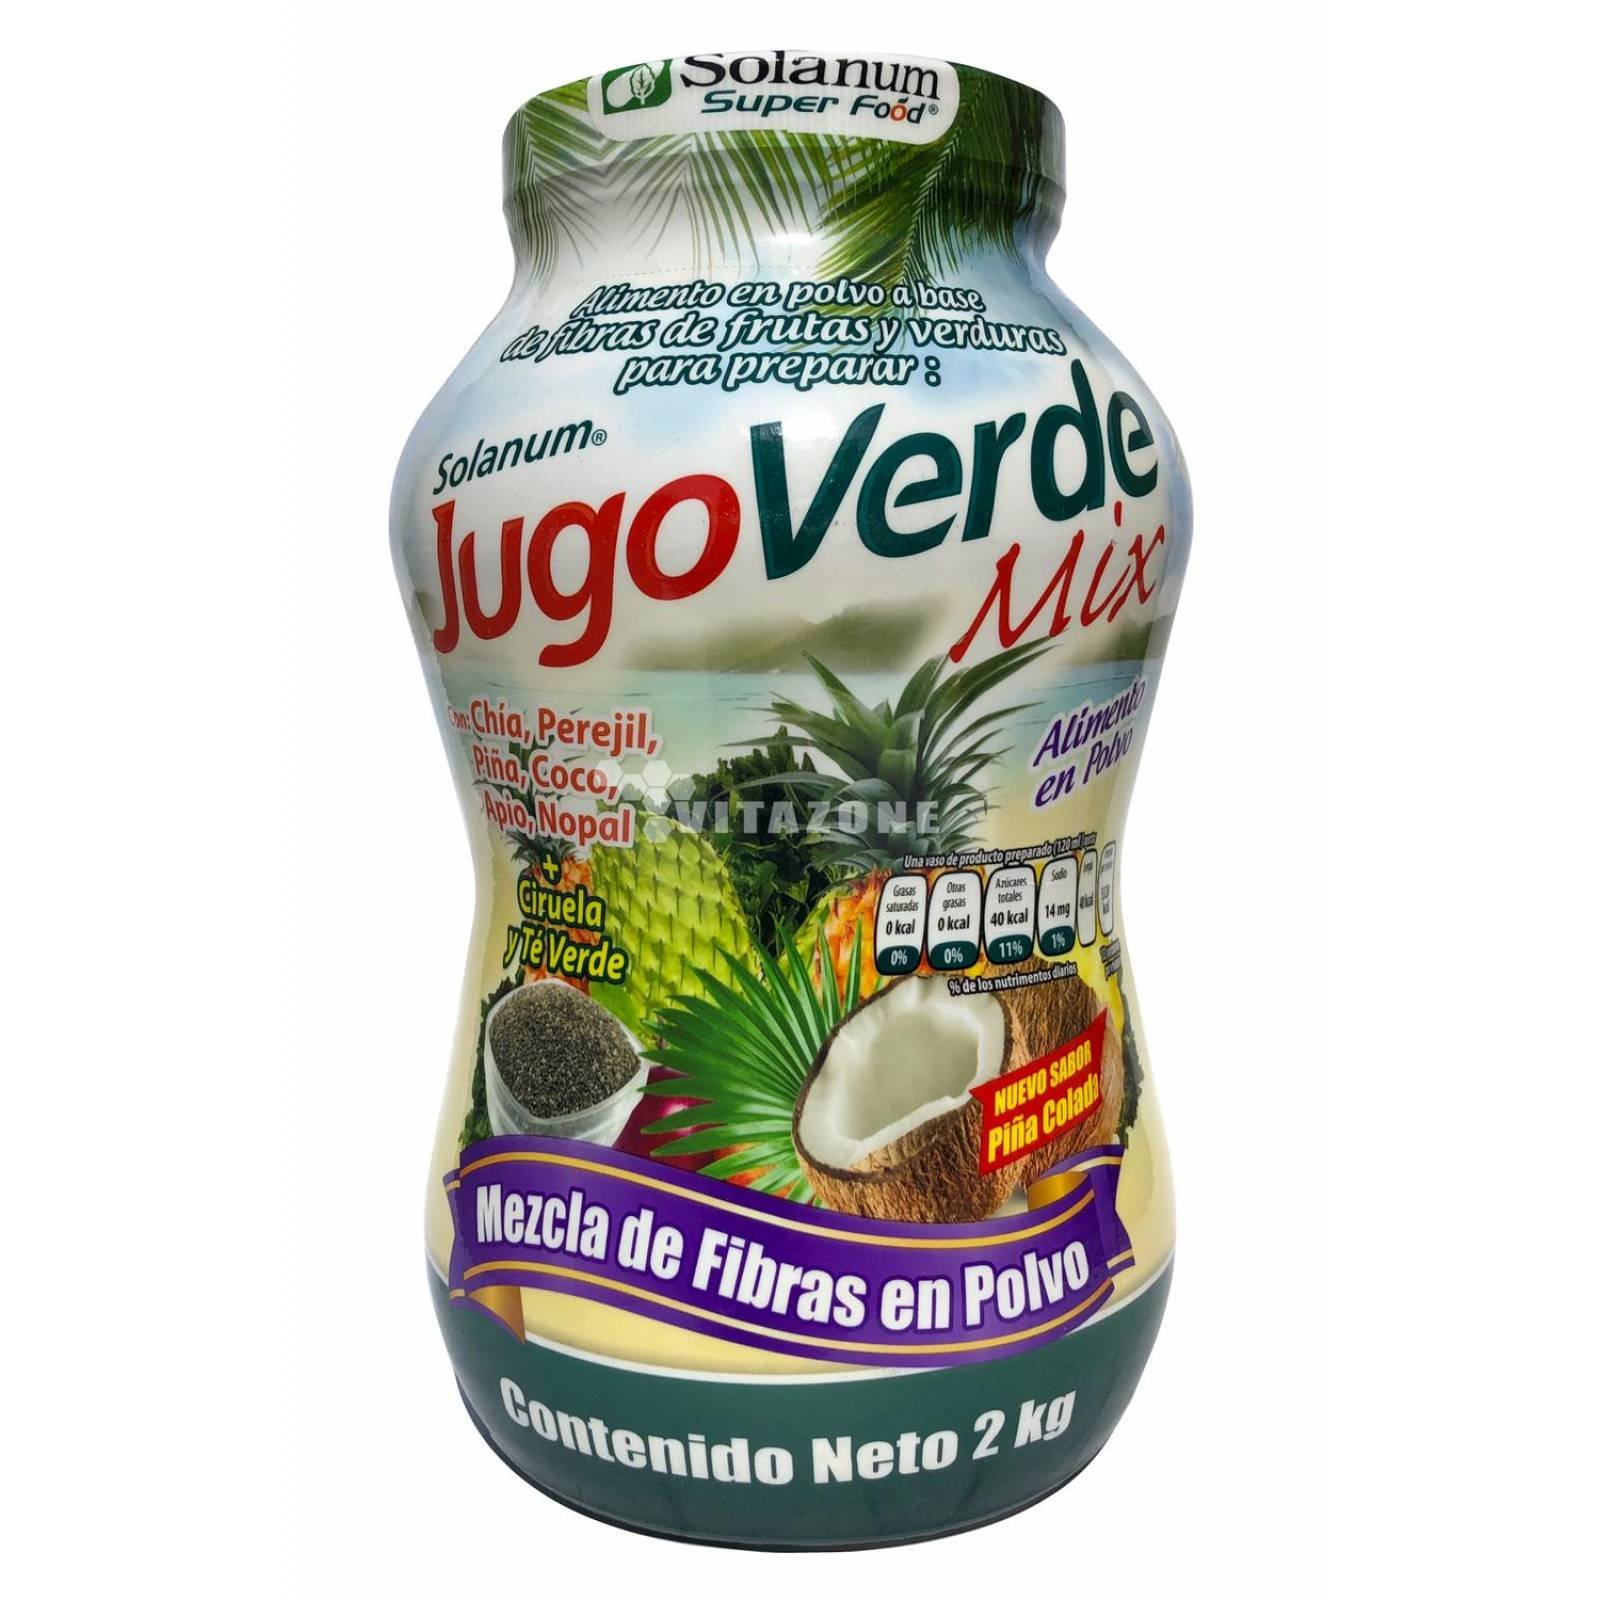 Jugo Verde Mix Piña Colada 2 kg Solanum 